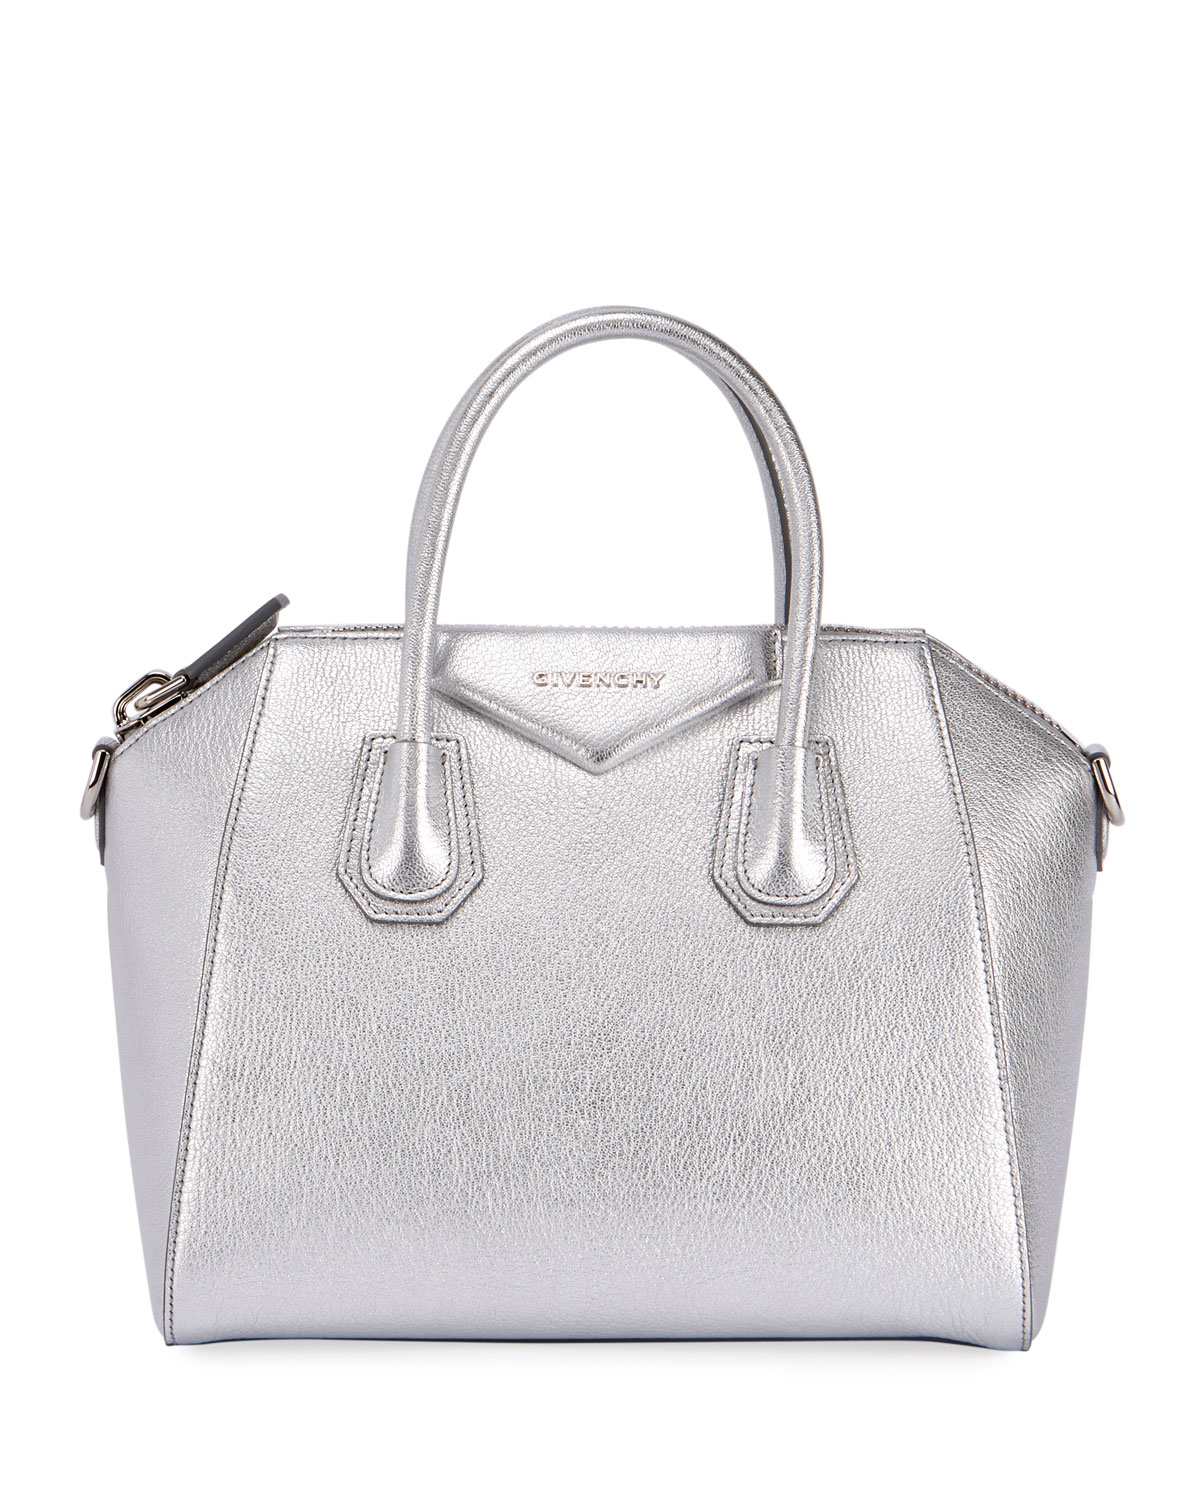 Luxury Designer Bag Investment Series: Givenchy Antigona Bag Review -  History, Prices 2020 • Save. Spend. Splurge.